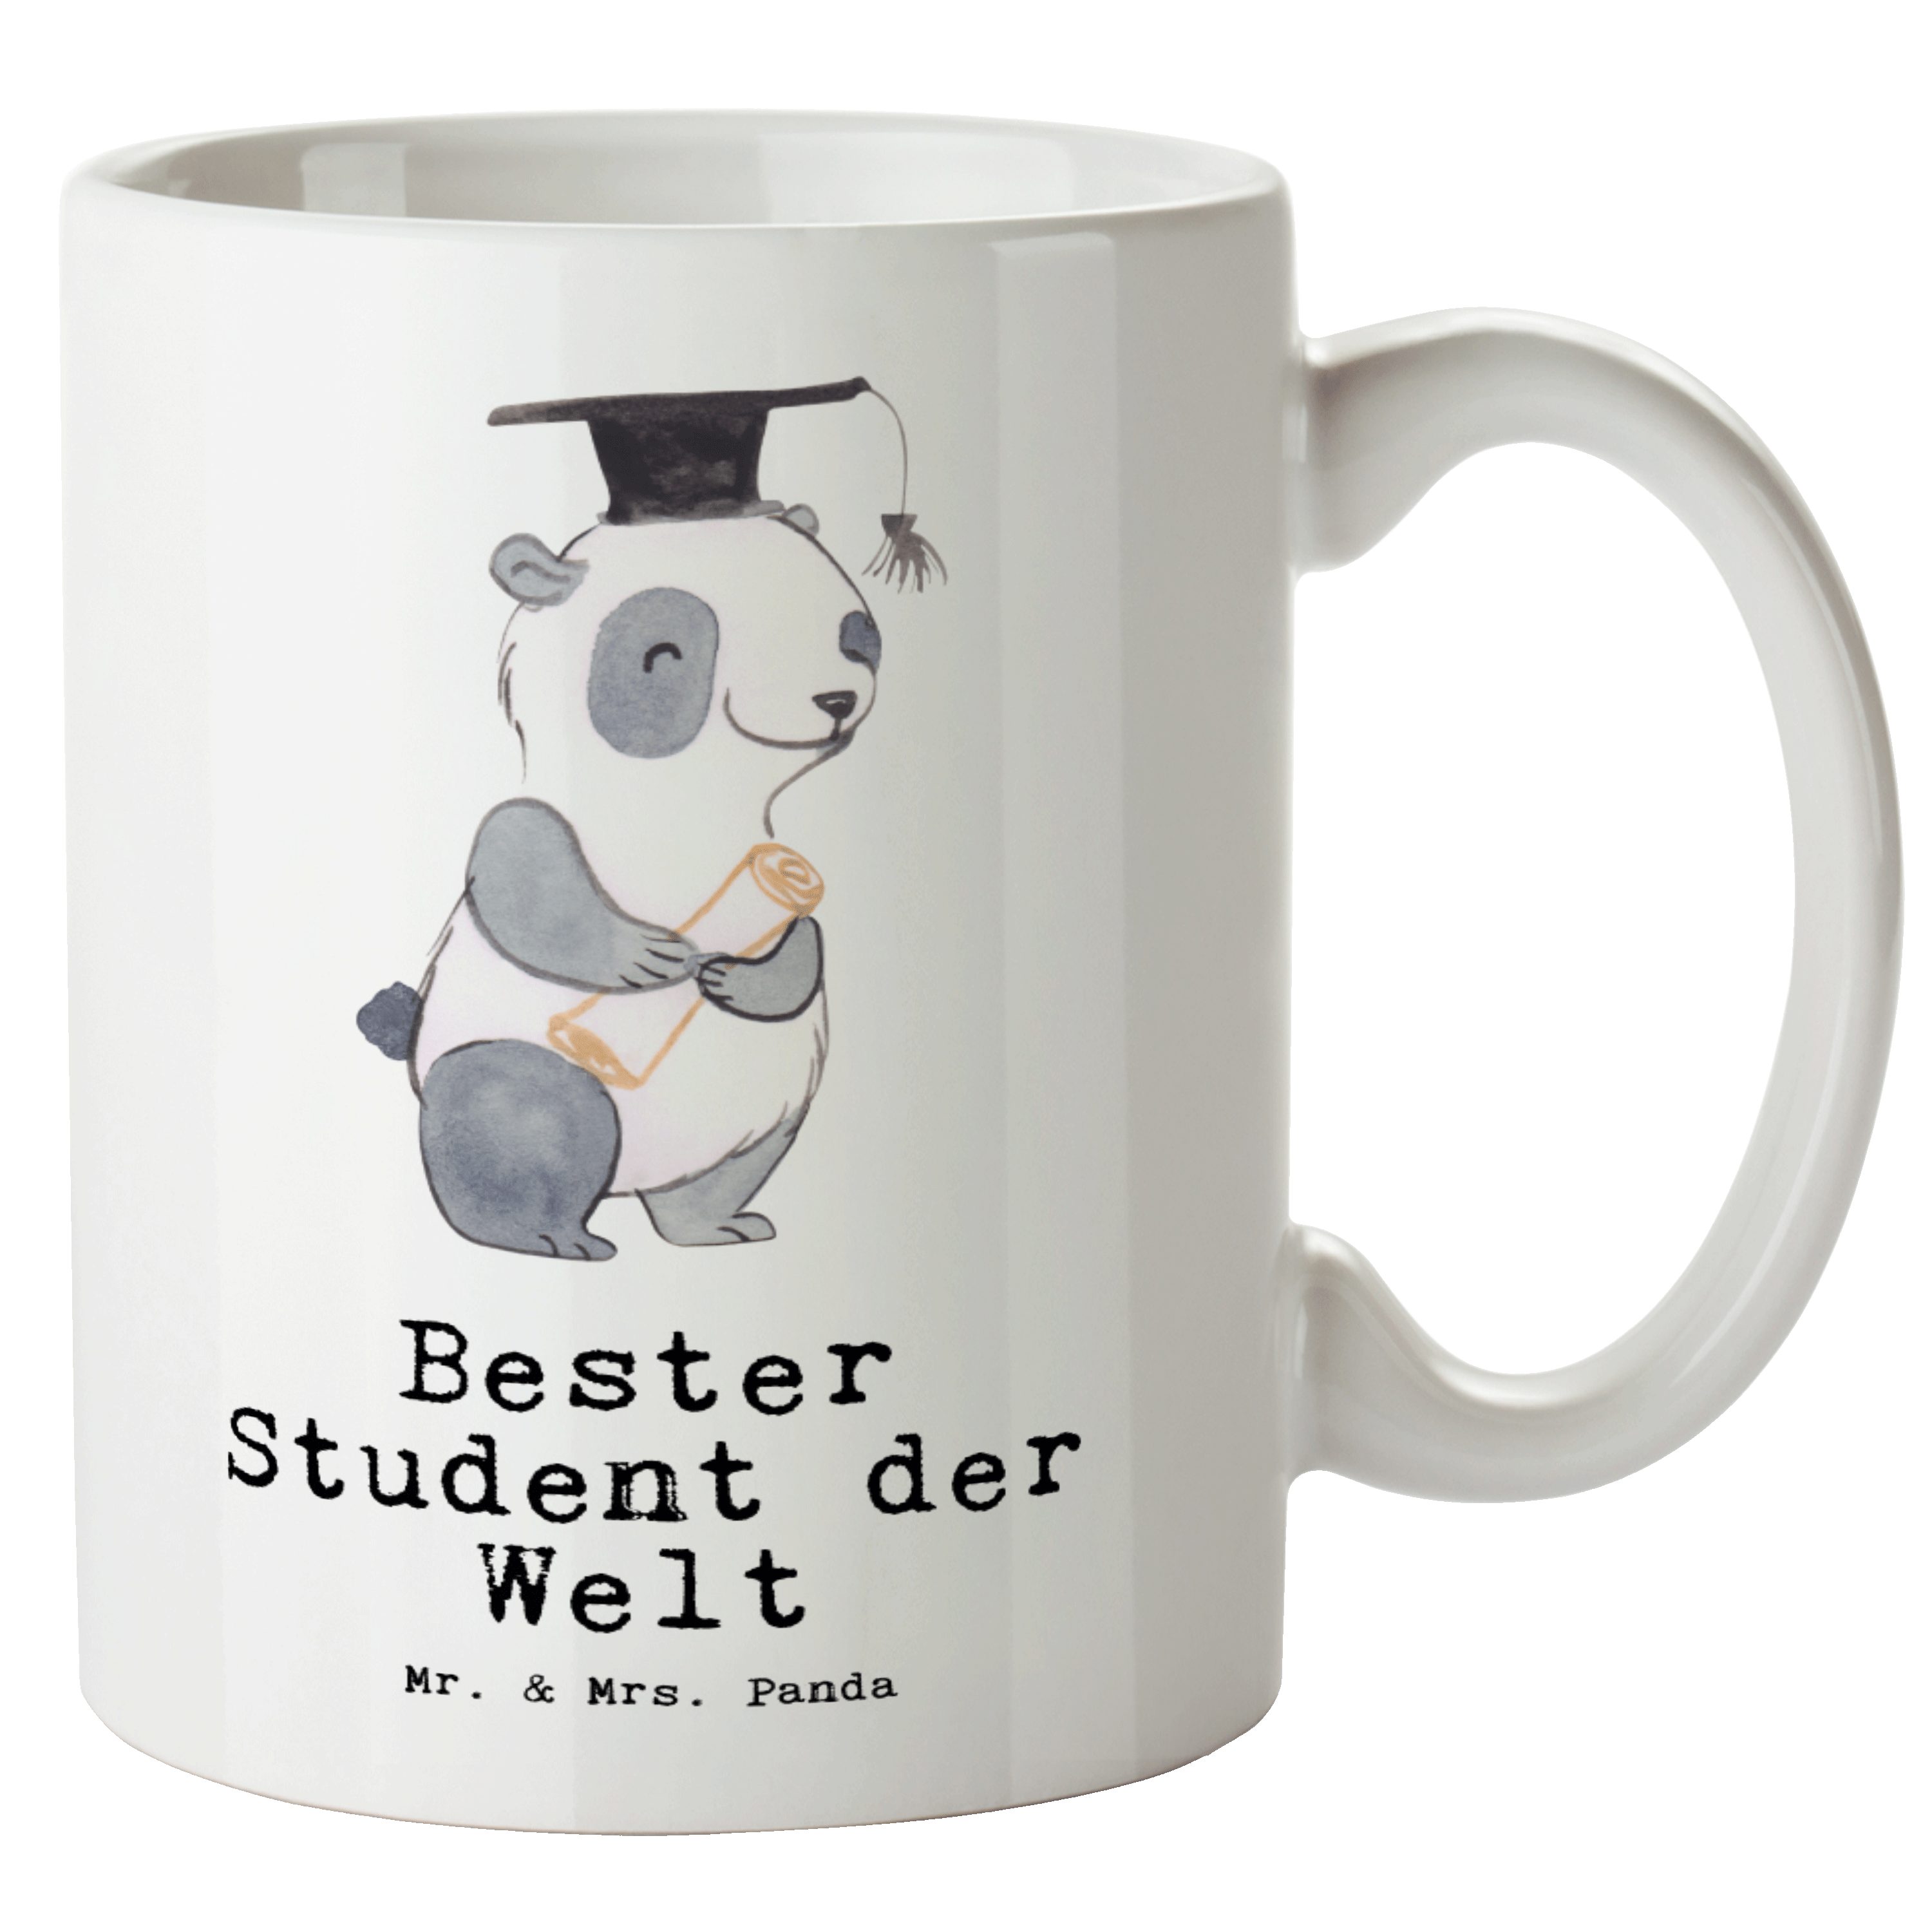 Mr. & Mrs. Panda Tasse Panda Bester Student der Welt - Weiß - Geschenk, Mitbringsel, Studien, XL Tasse Keramik